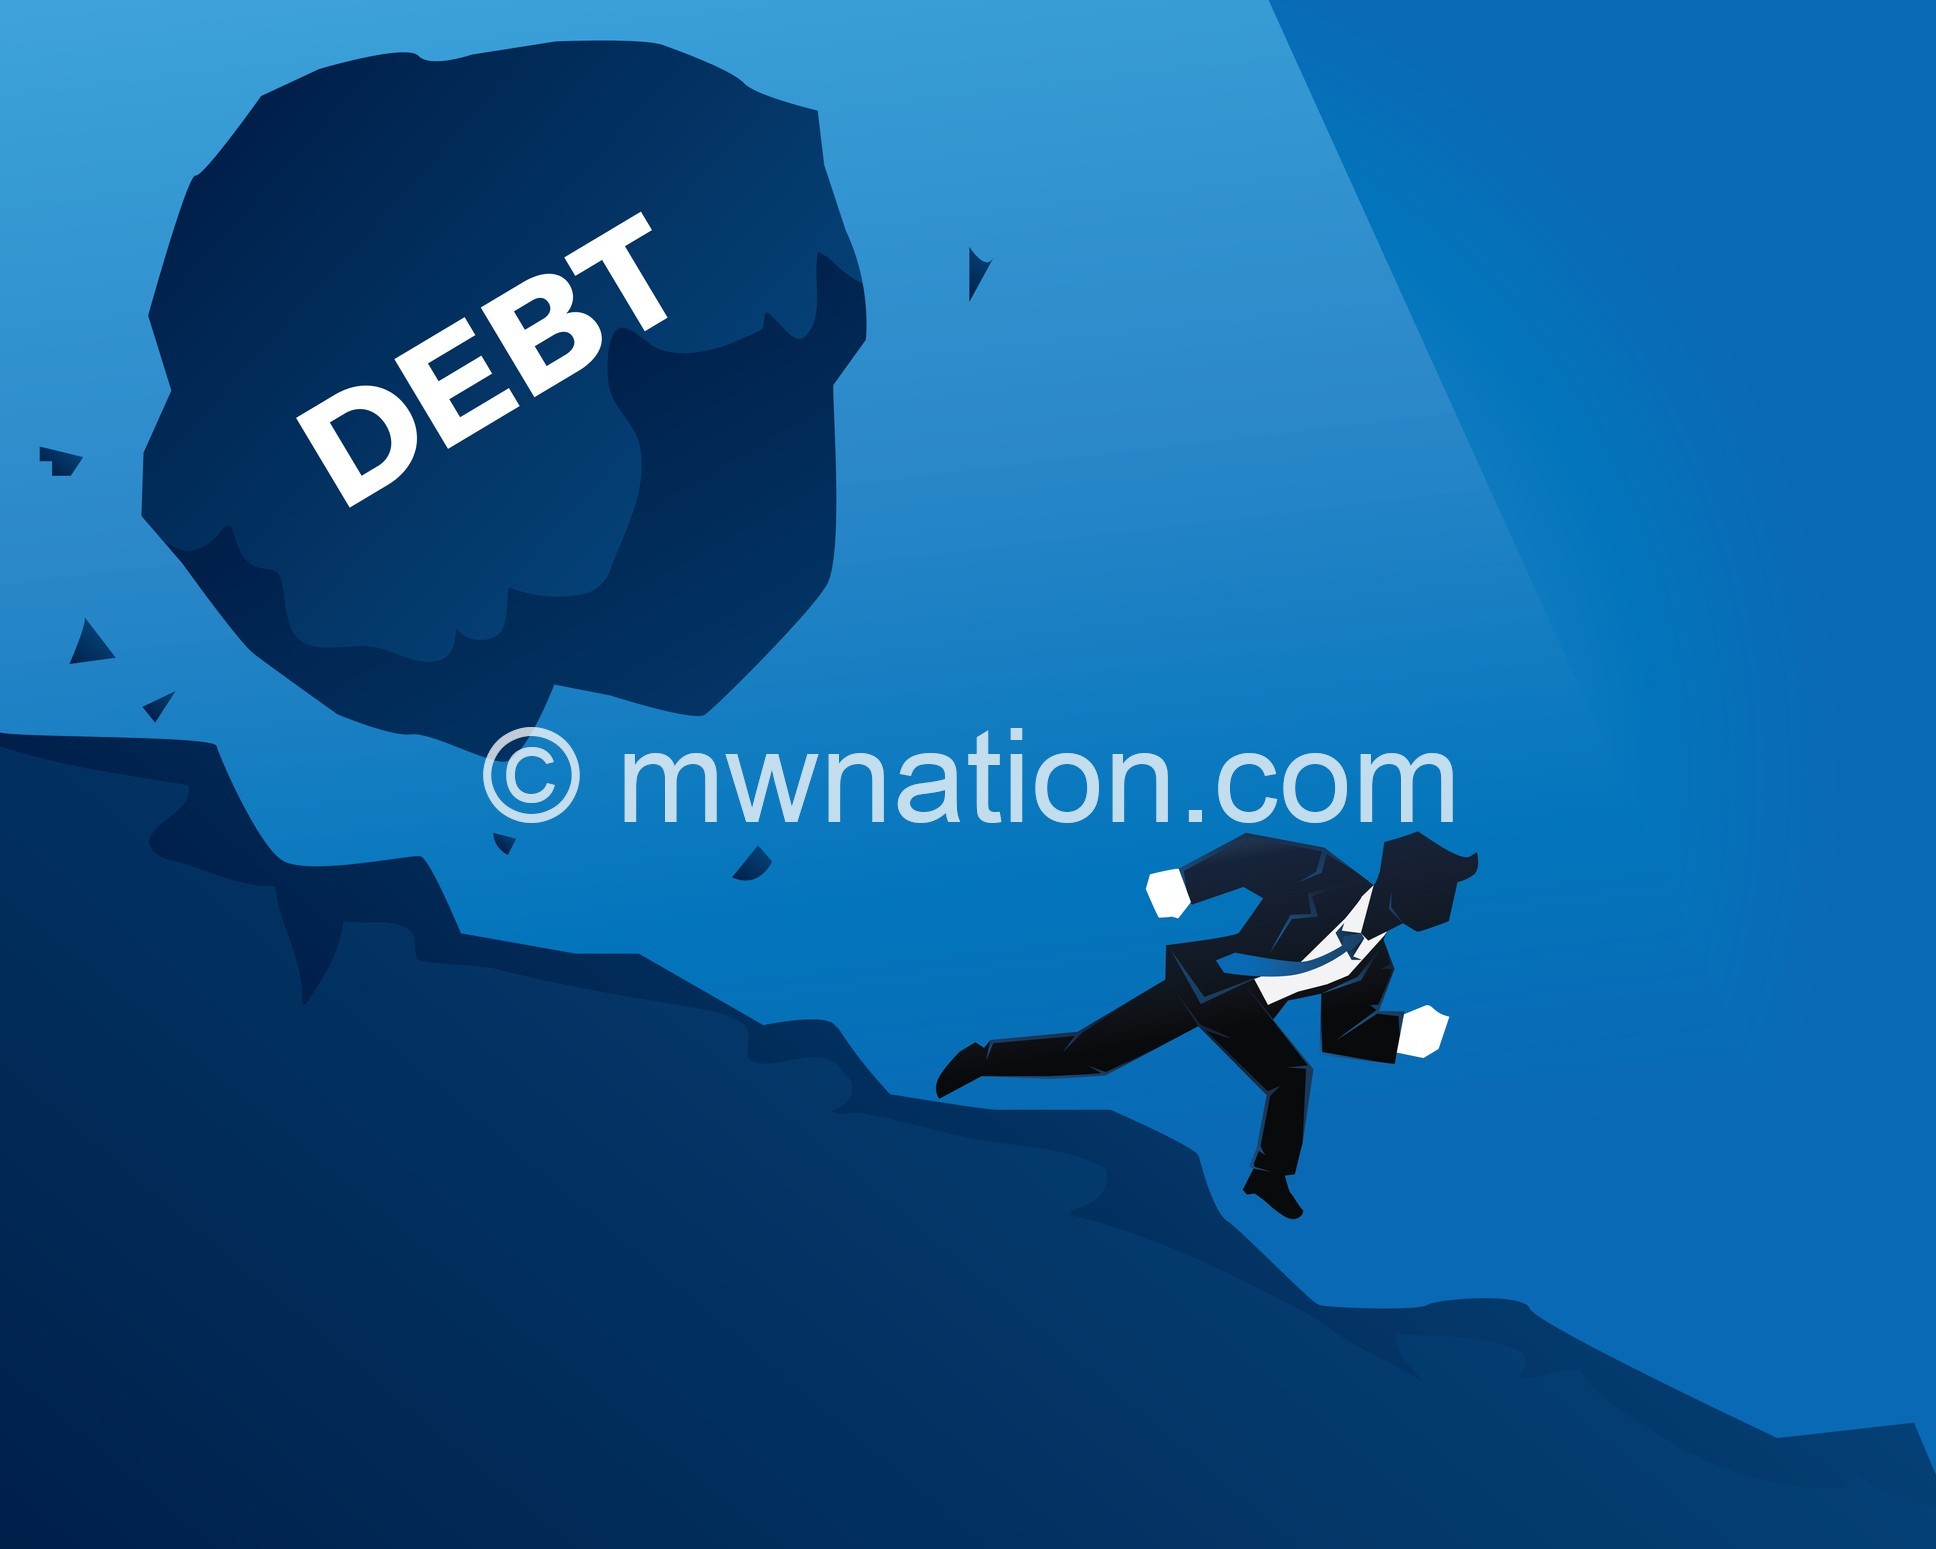 Centre urges govt to rethink debt strategy - The Nation Online